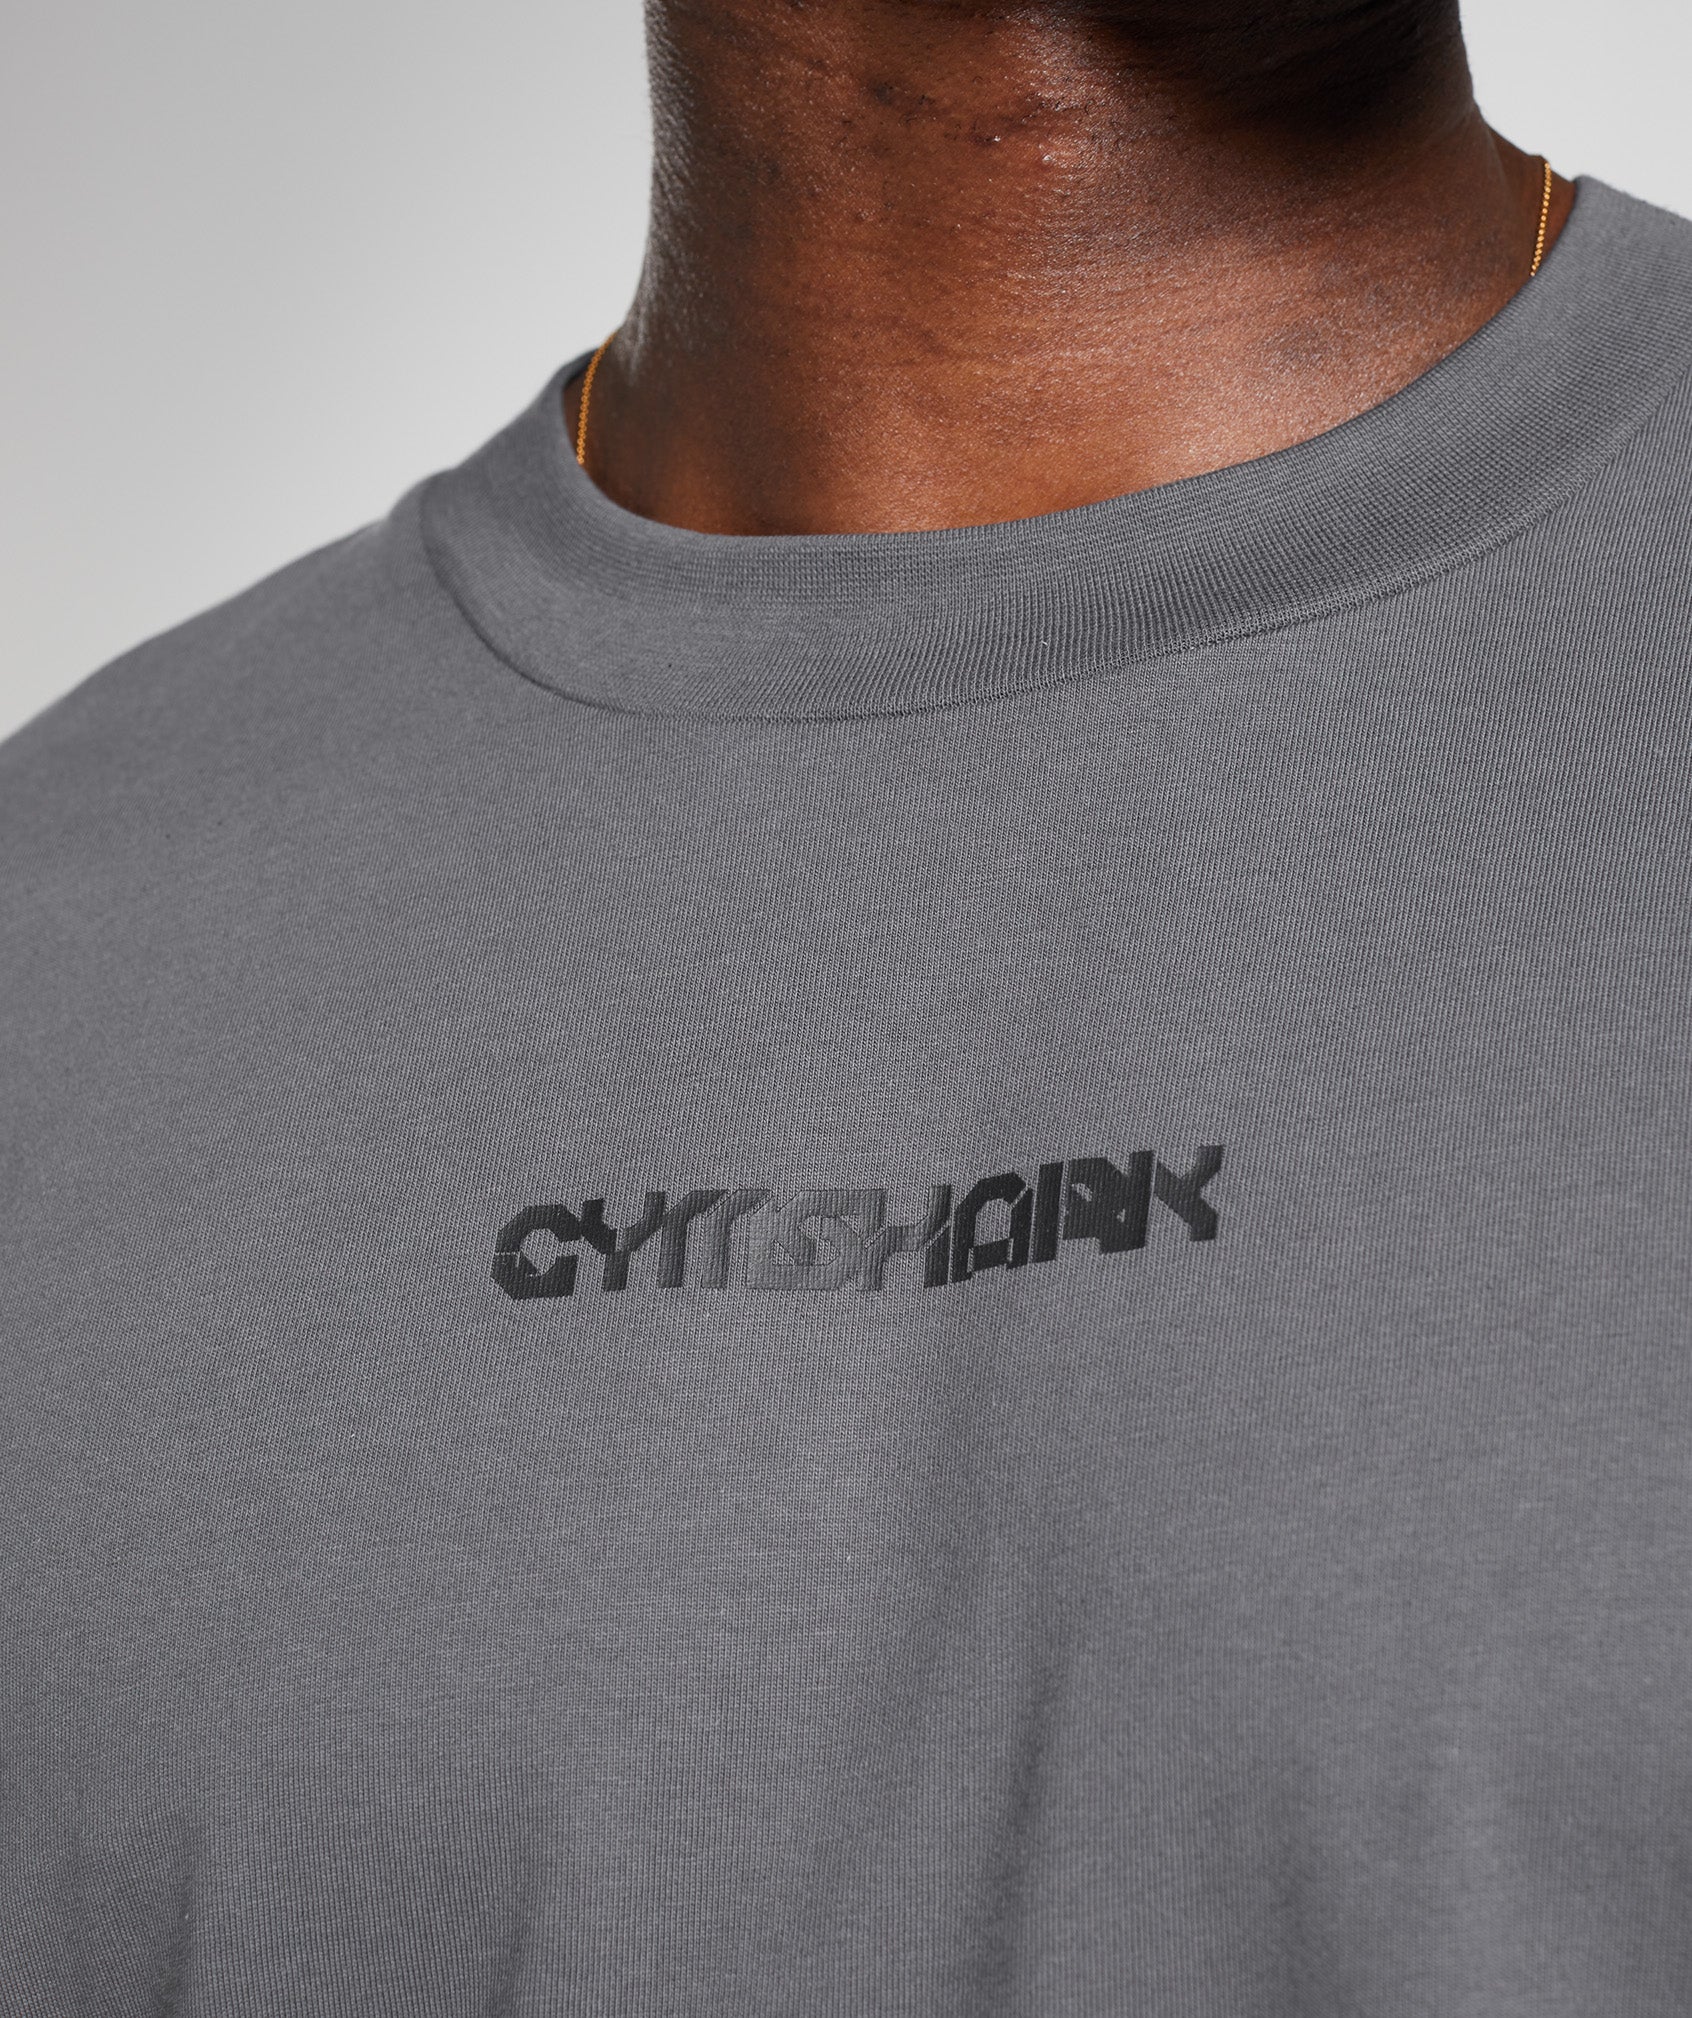 Gymshark Arrival T-Shirt - Silhouette Grey